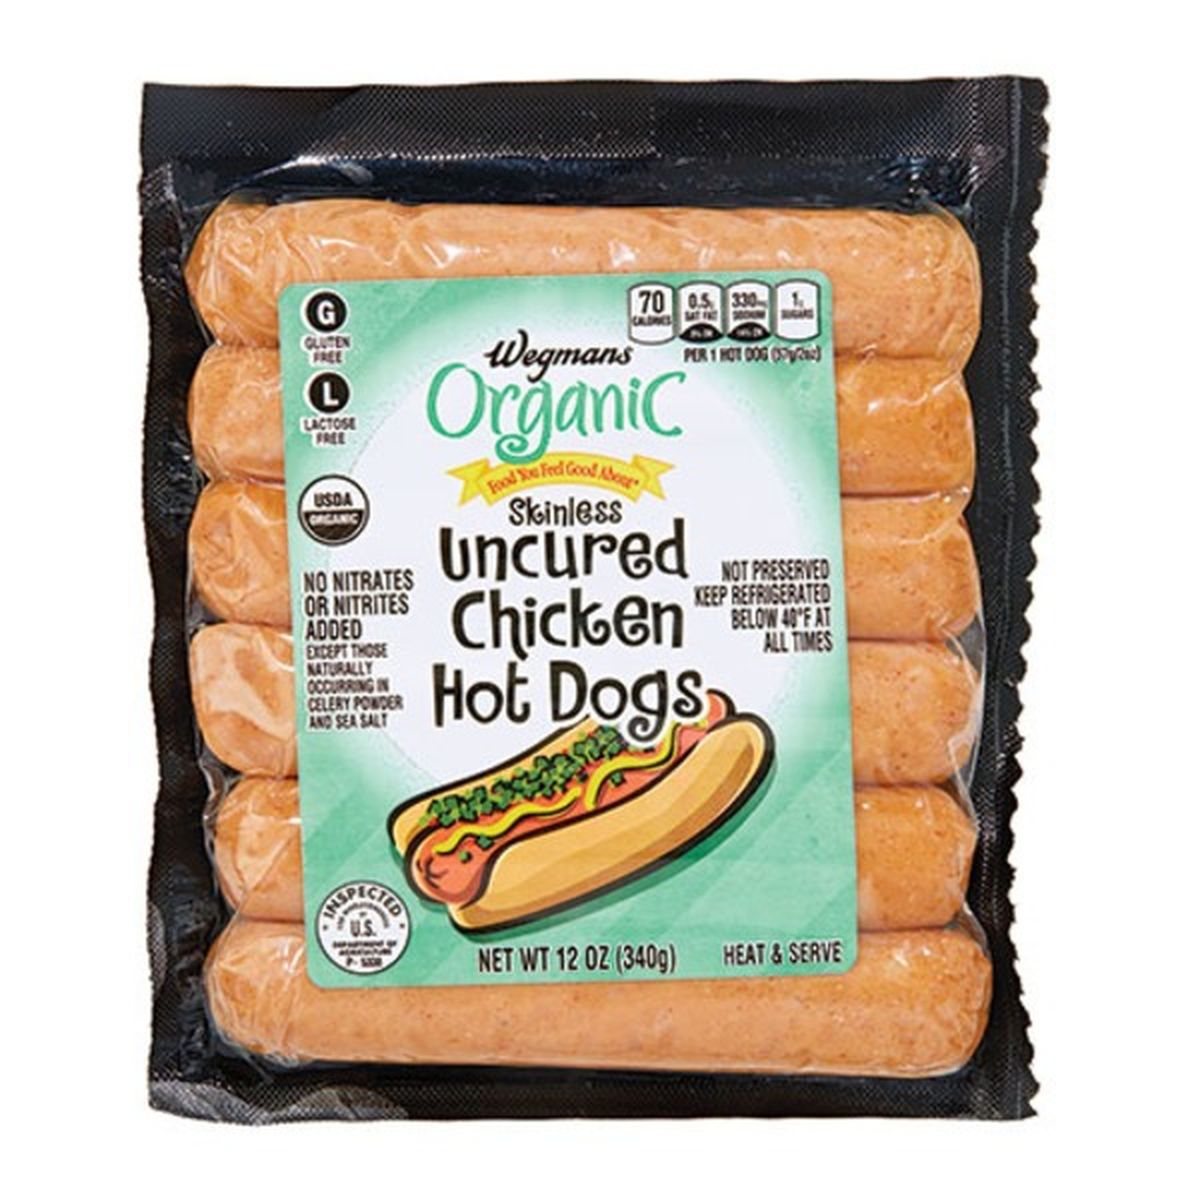 Calories in Wegmans Organic Skinless Uncured Chicken Hot Dogs